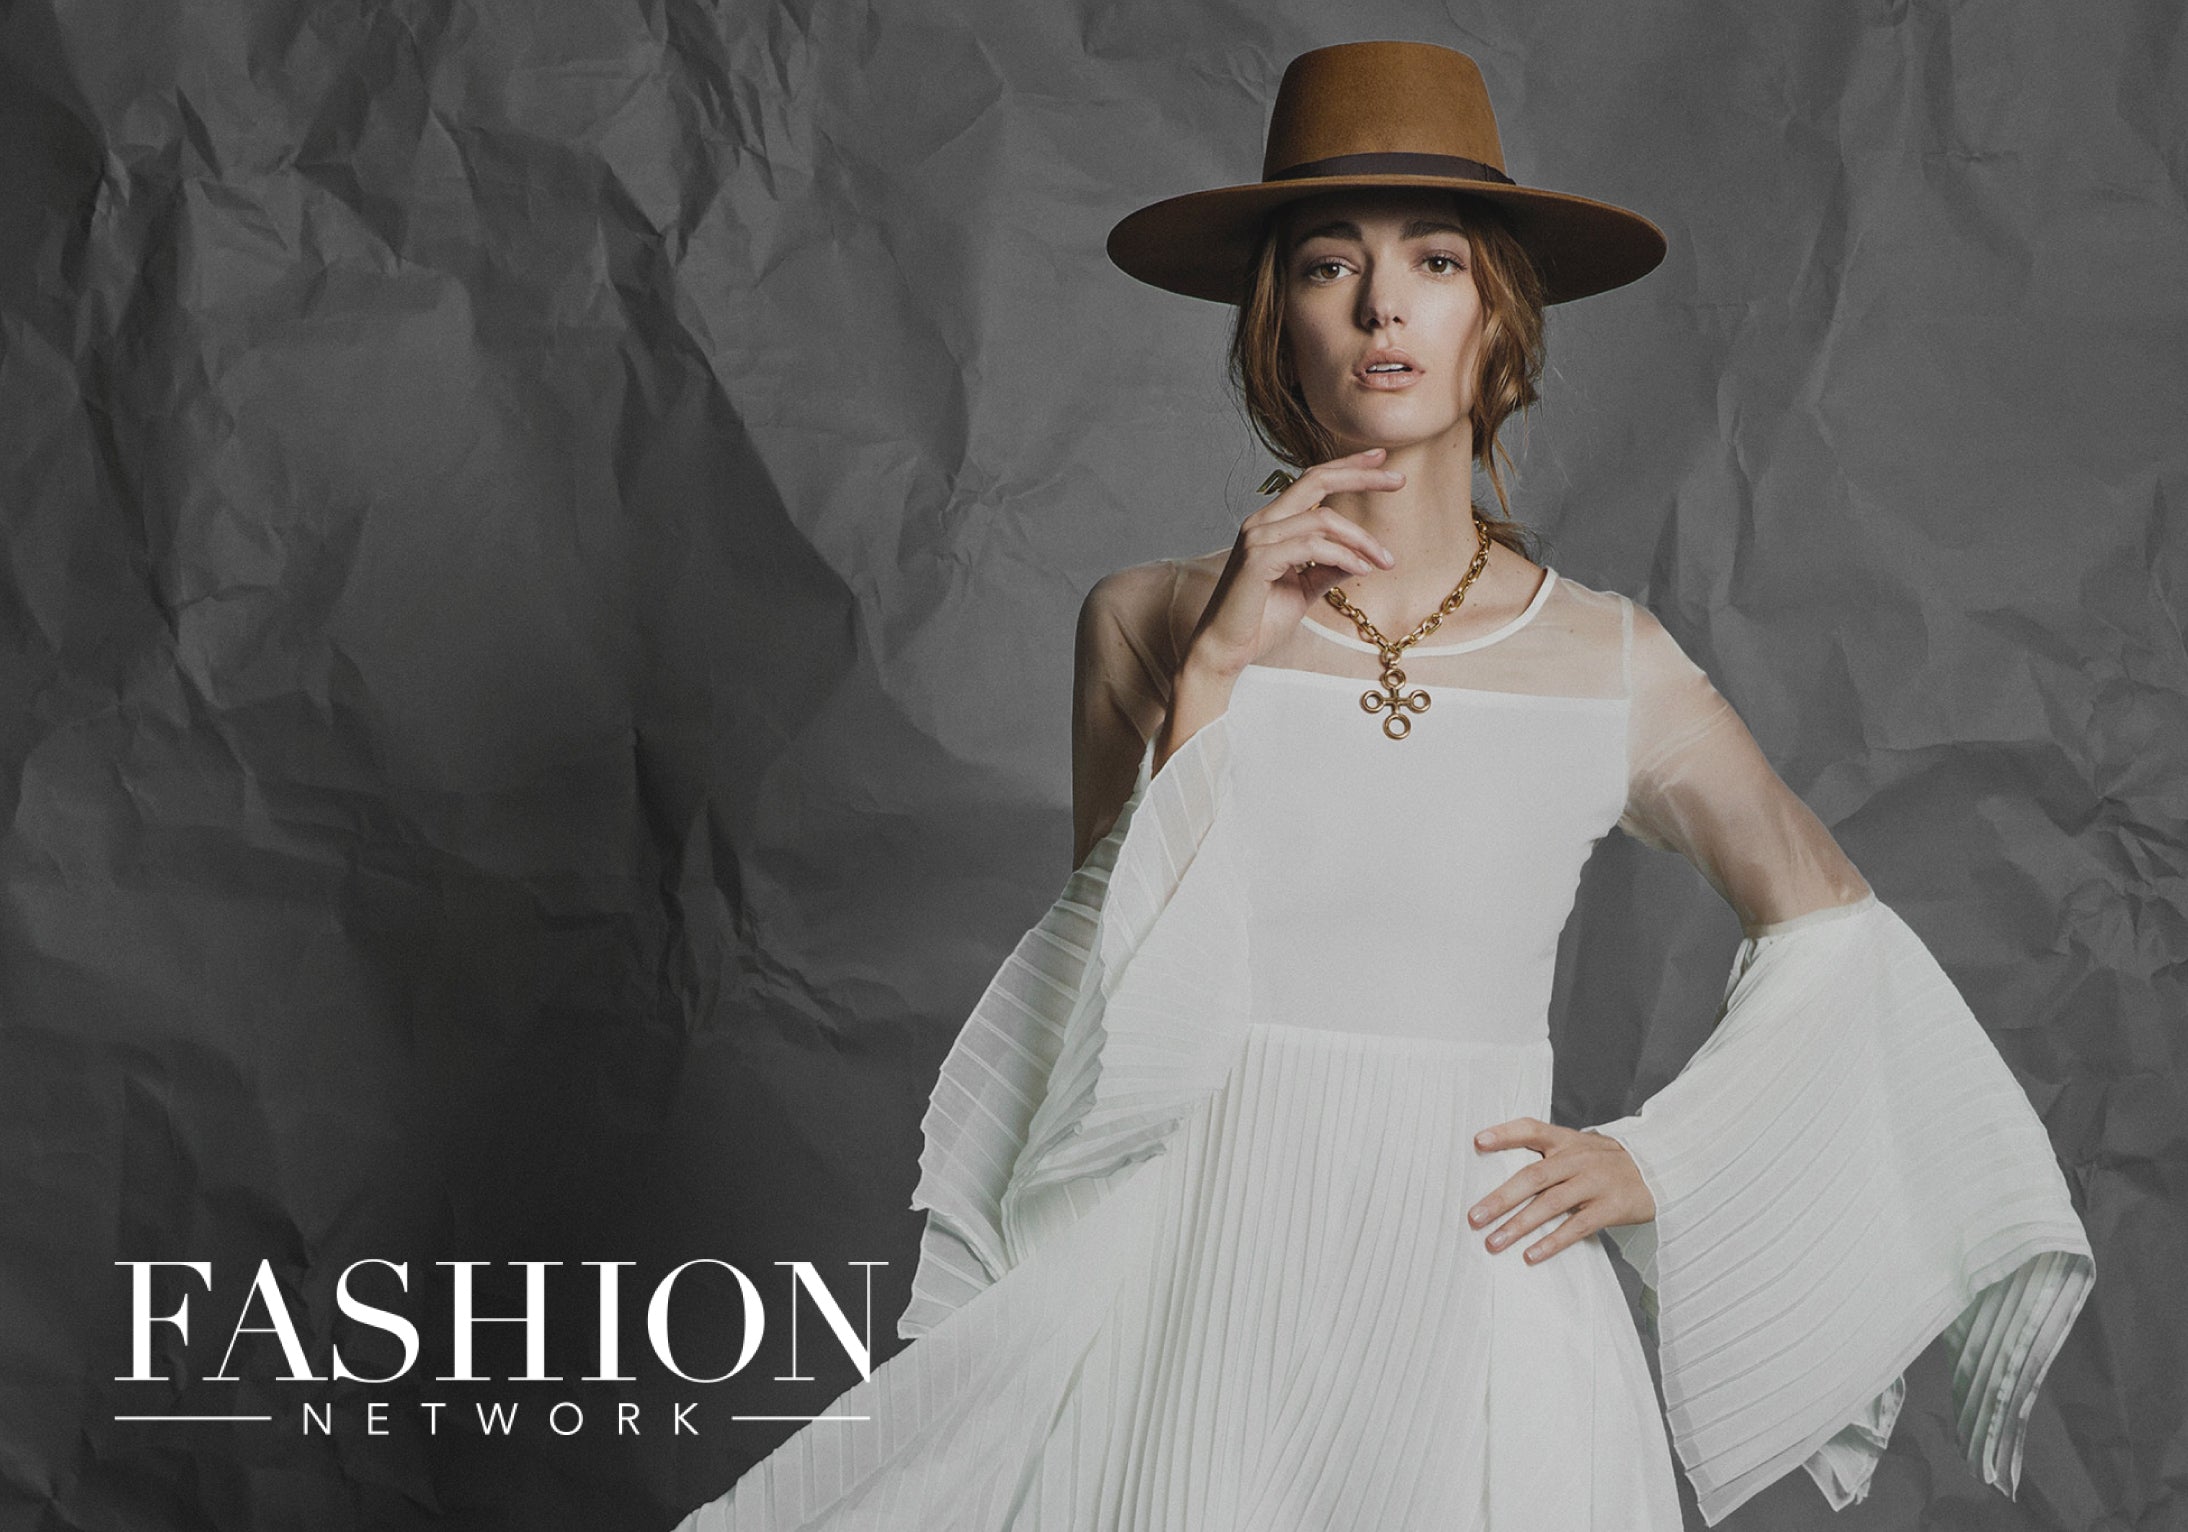 Fashion Network - Sofia Sanchez de Betak to launch new brand Chufy at Bergdorf Goodman